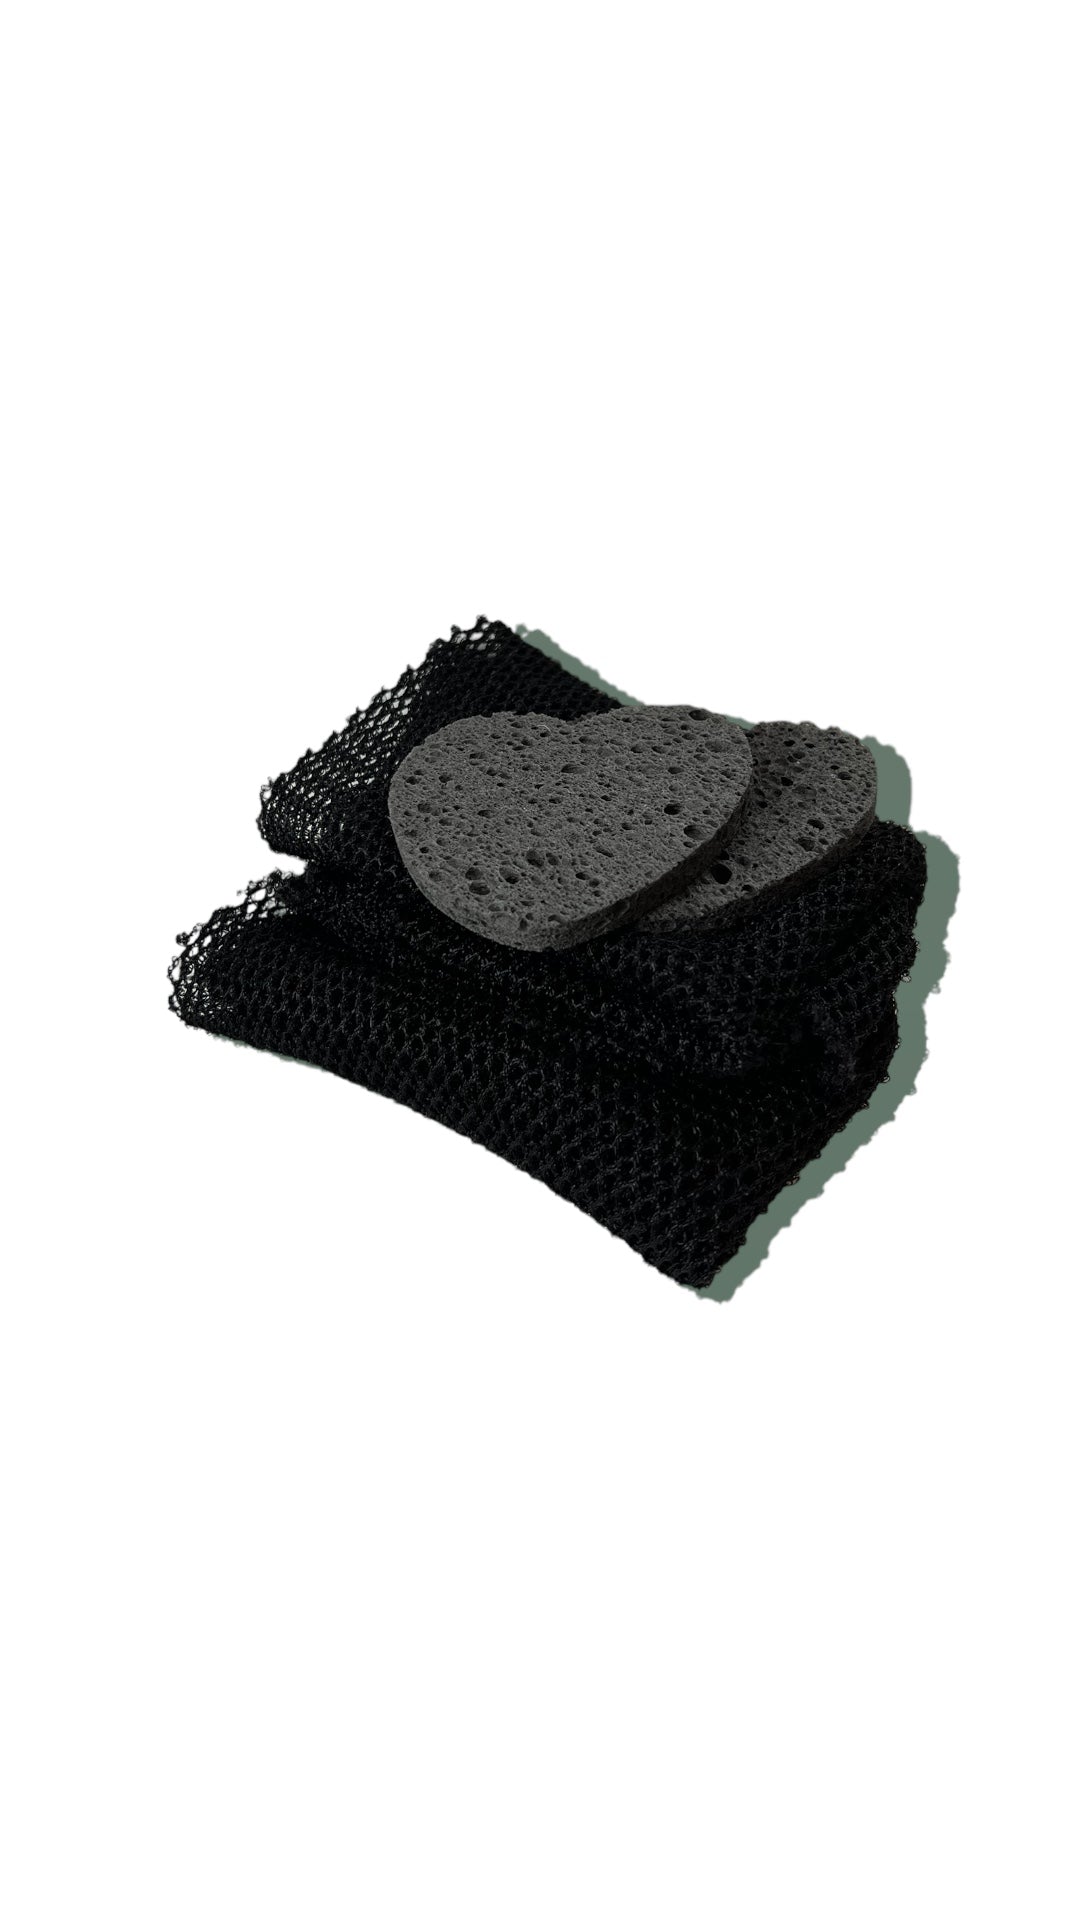 SIMPLE TOOL KIT -Bath Net  & Black Heart Sponges